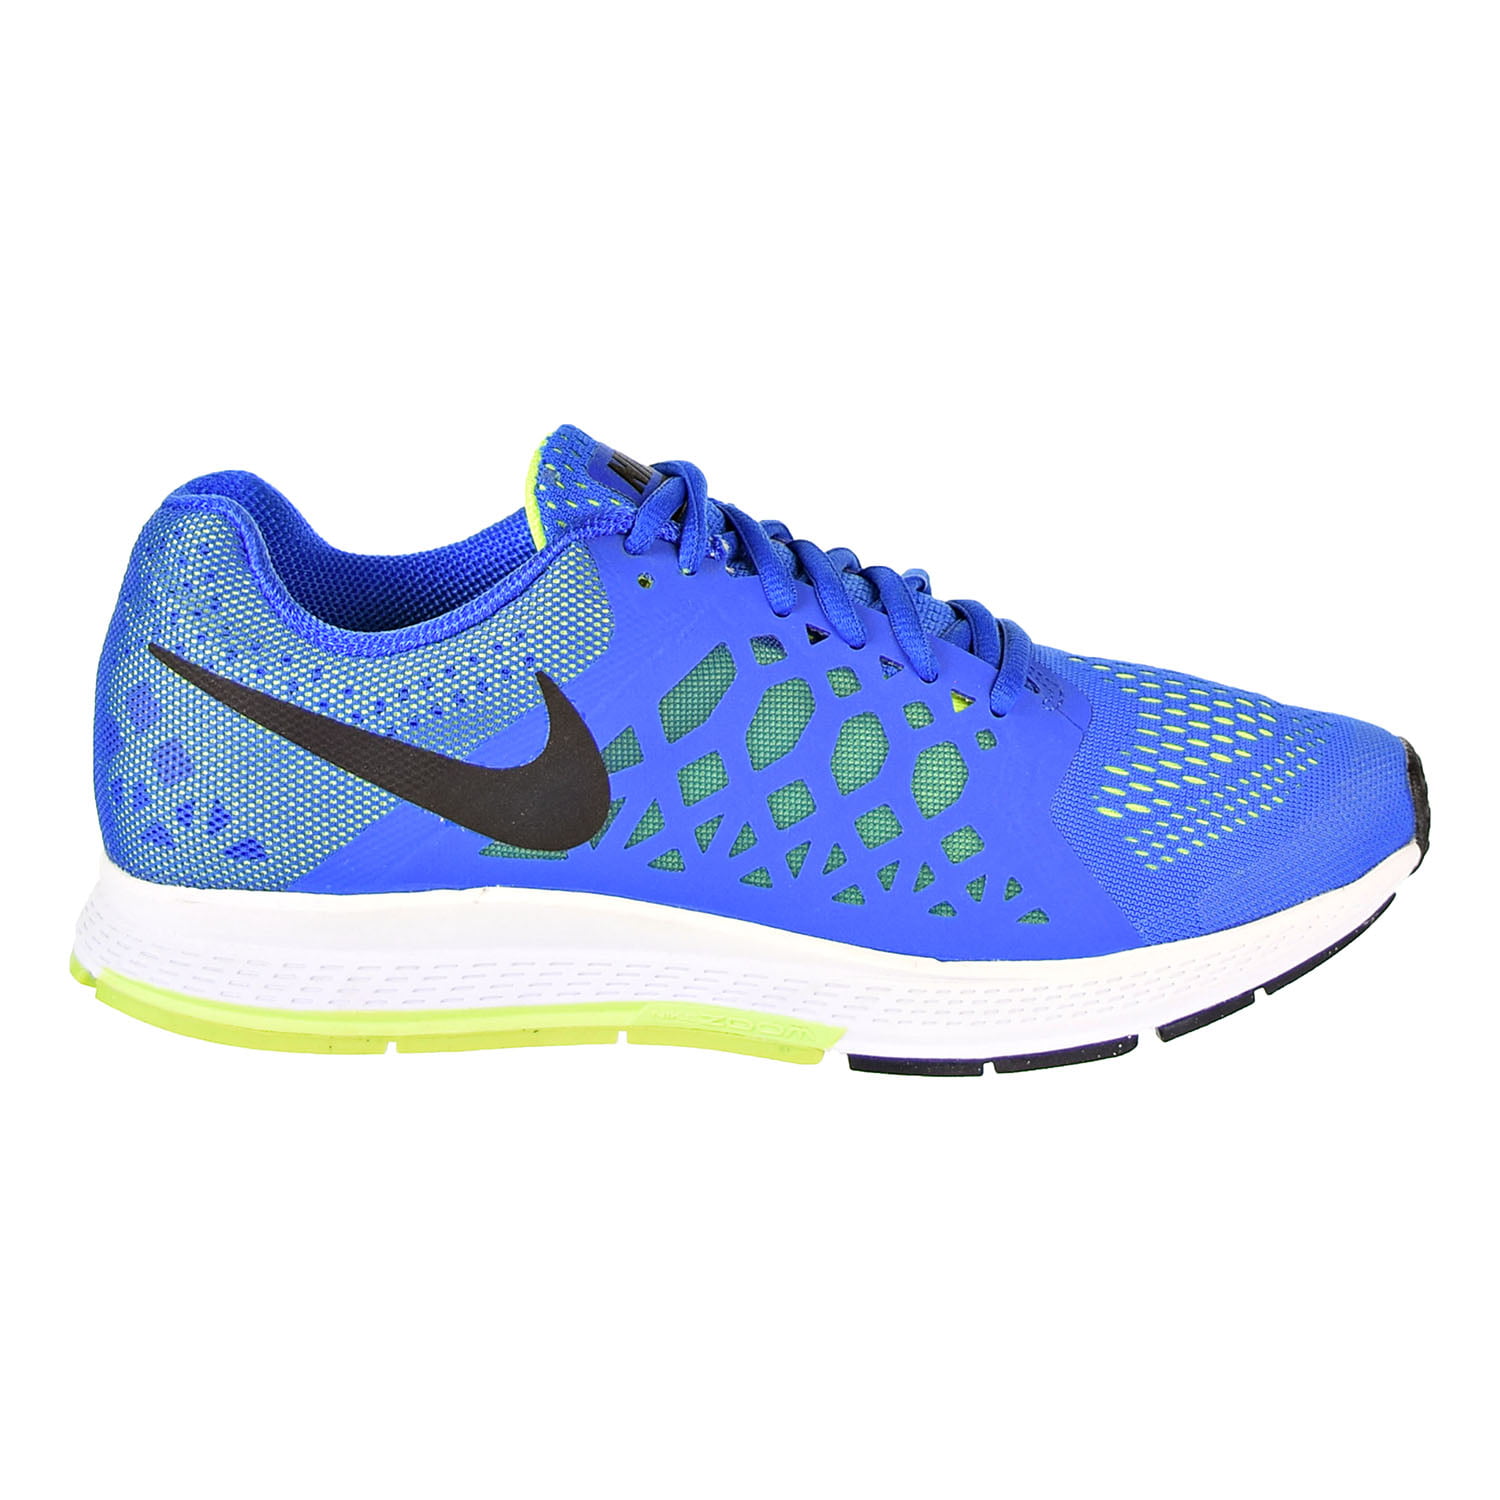 Nike Zoom Pegasus 31 Men's Shoes Hyper Cobalt/Black/Volt 652925-400